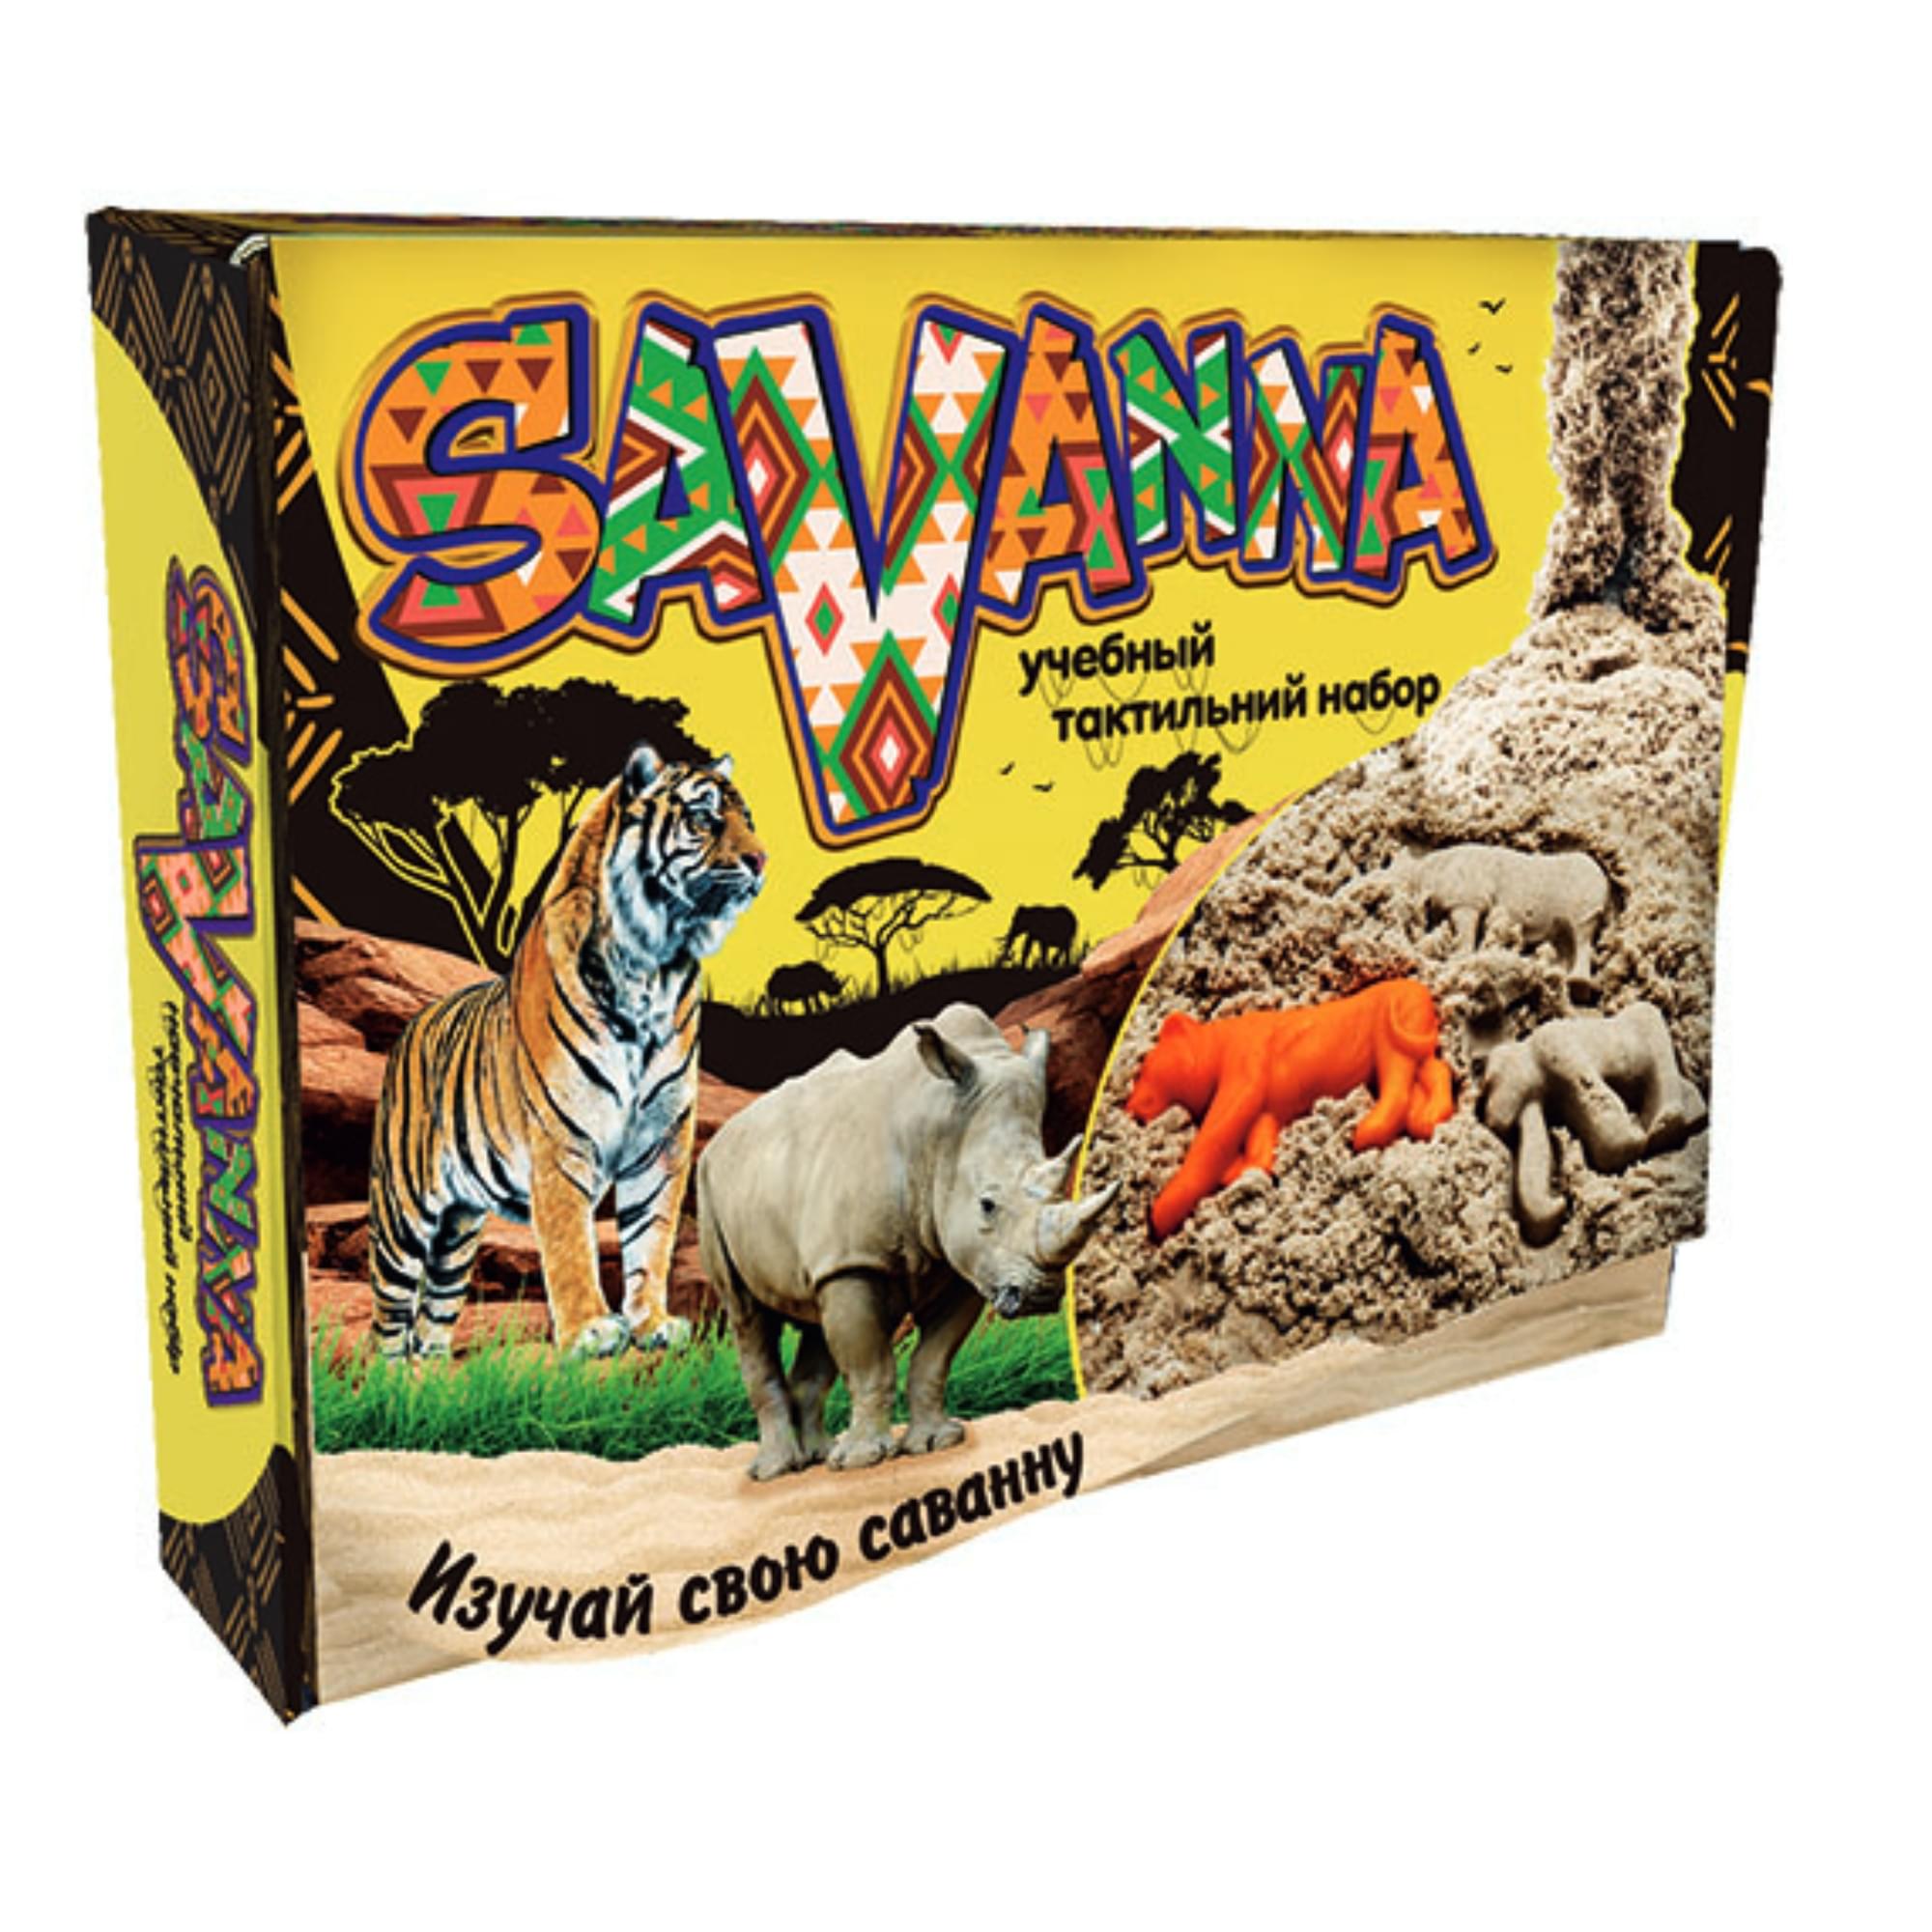 Creative kit "Savanna" (51205) (rus.)